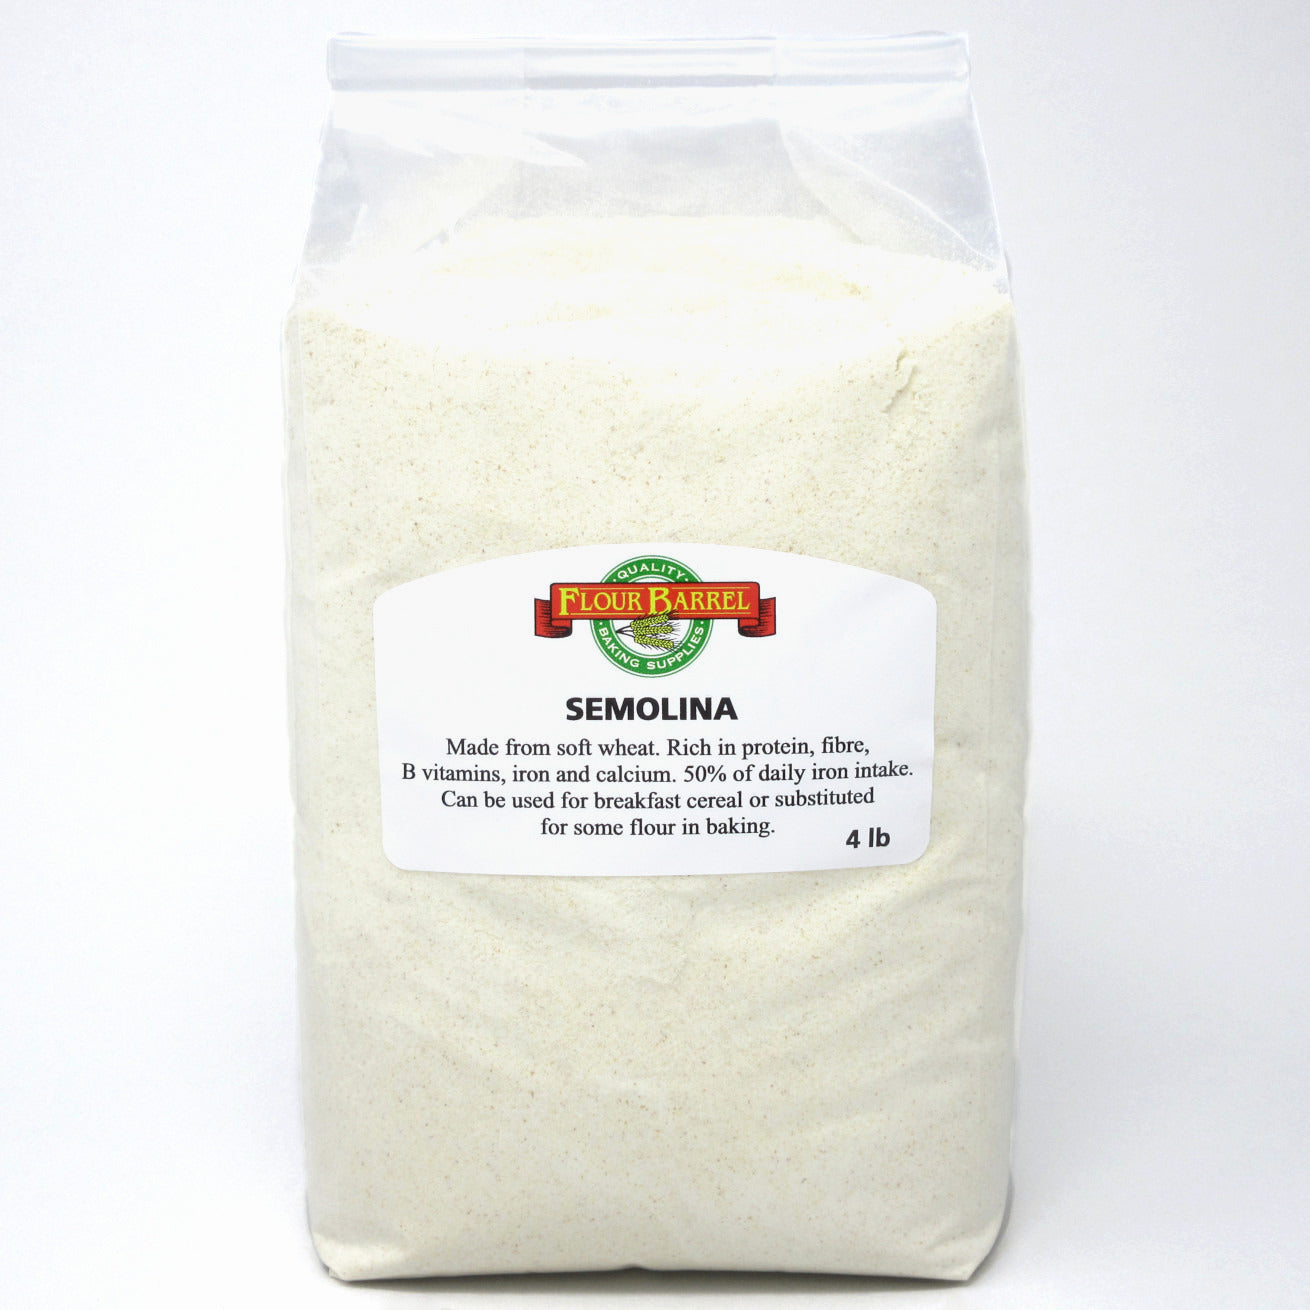 Flour Barrel product image - Semolina